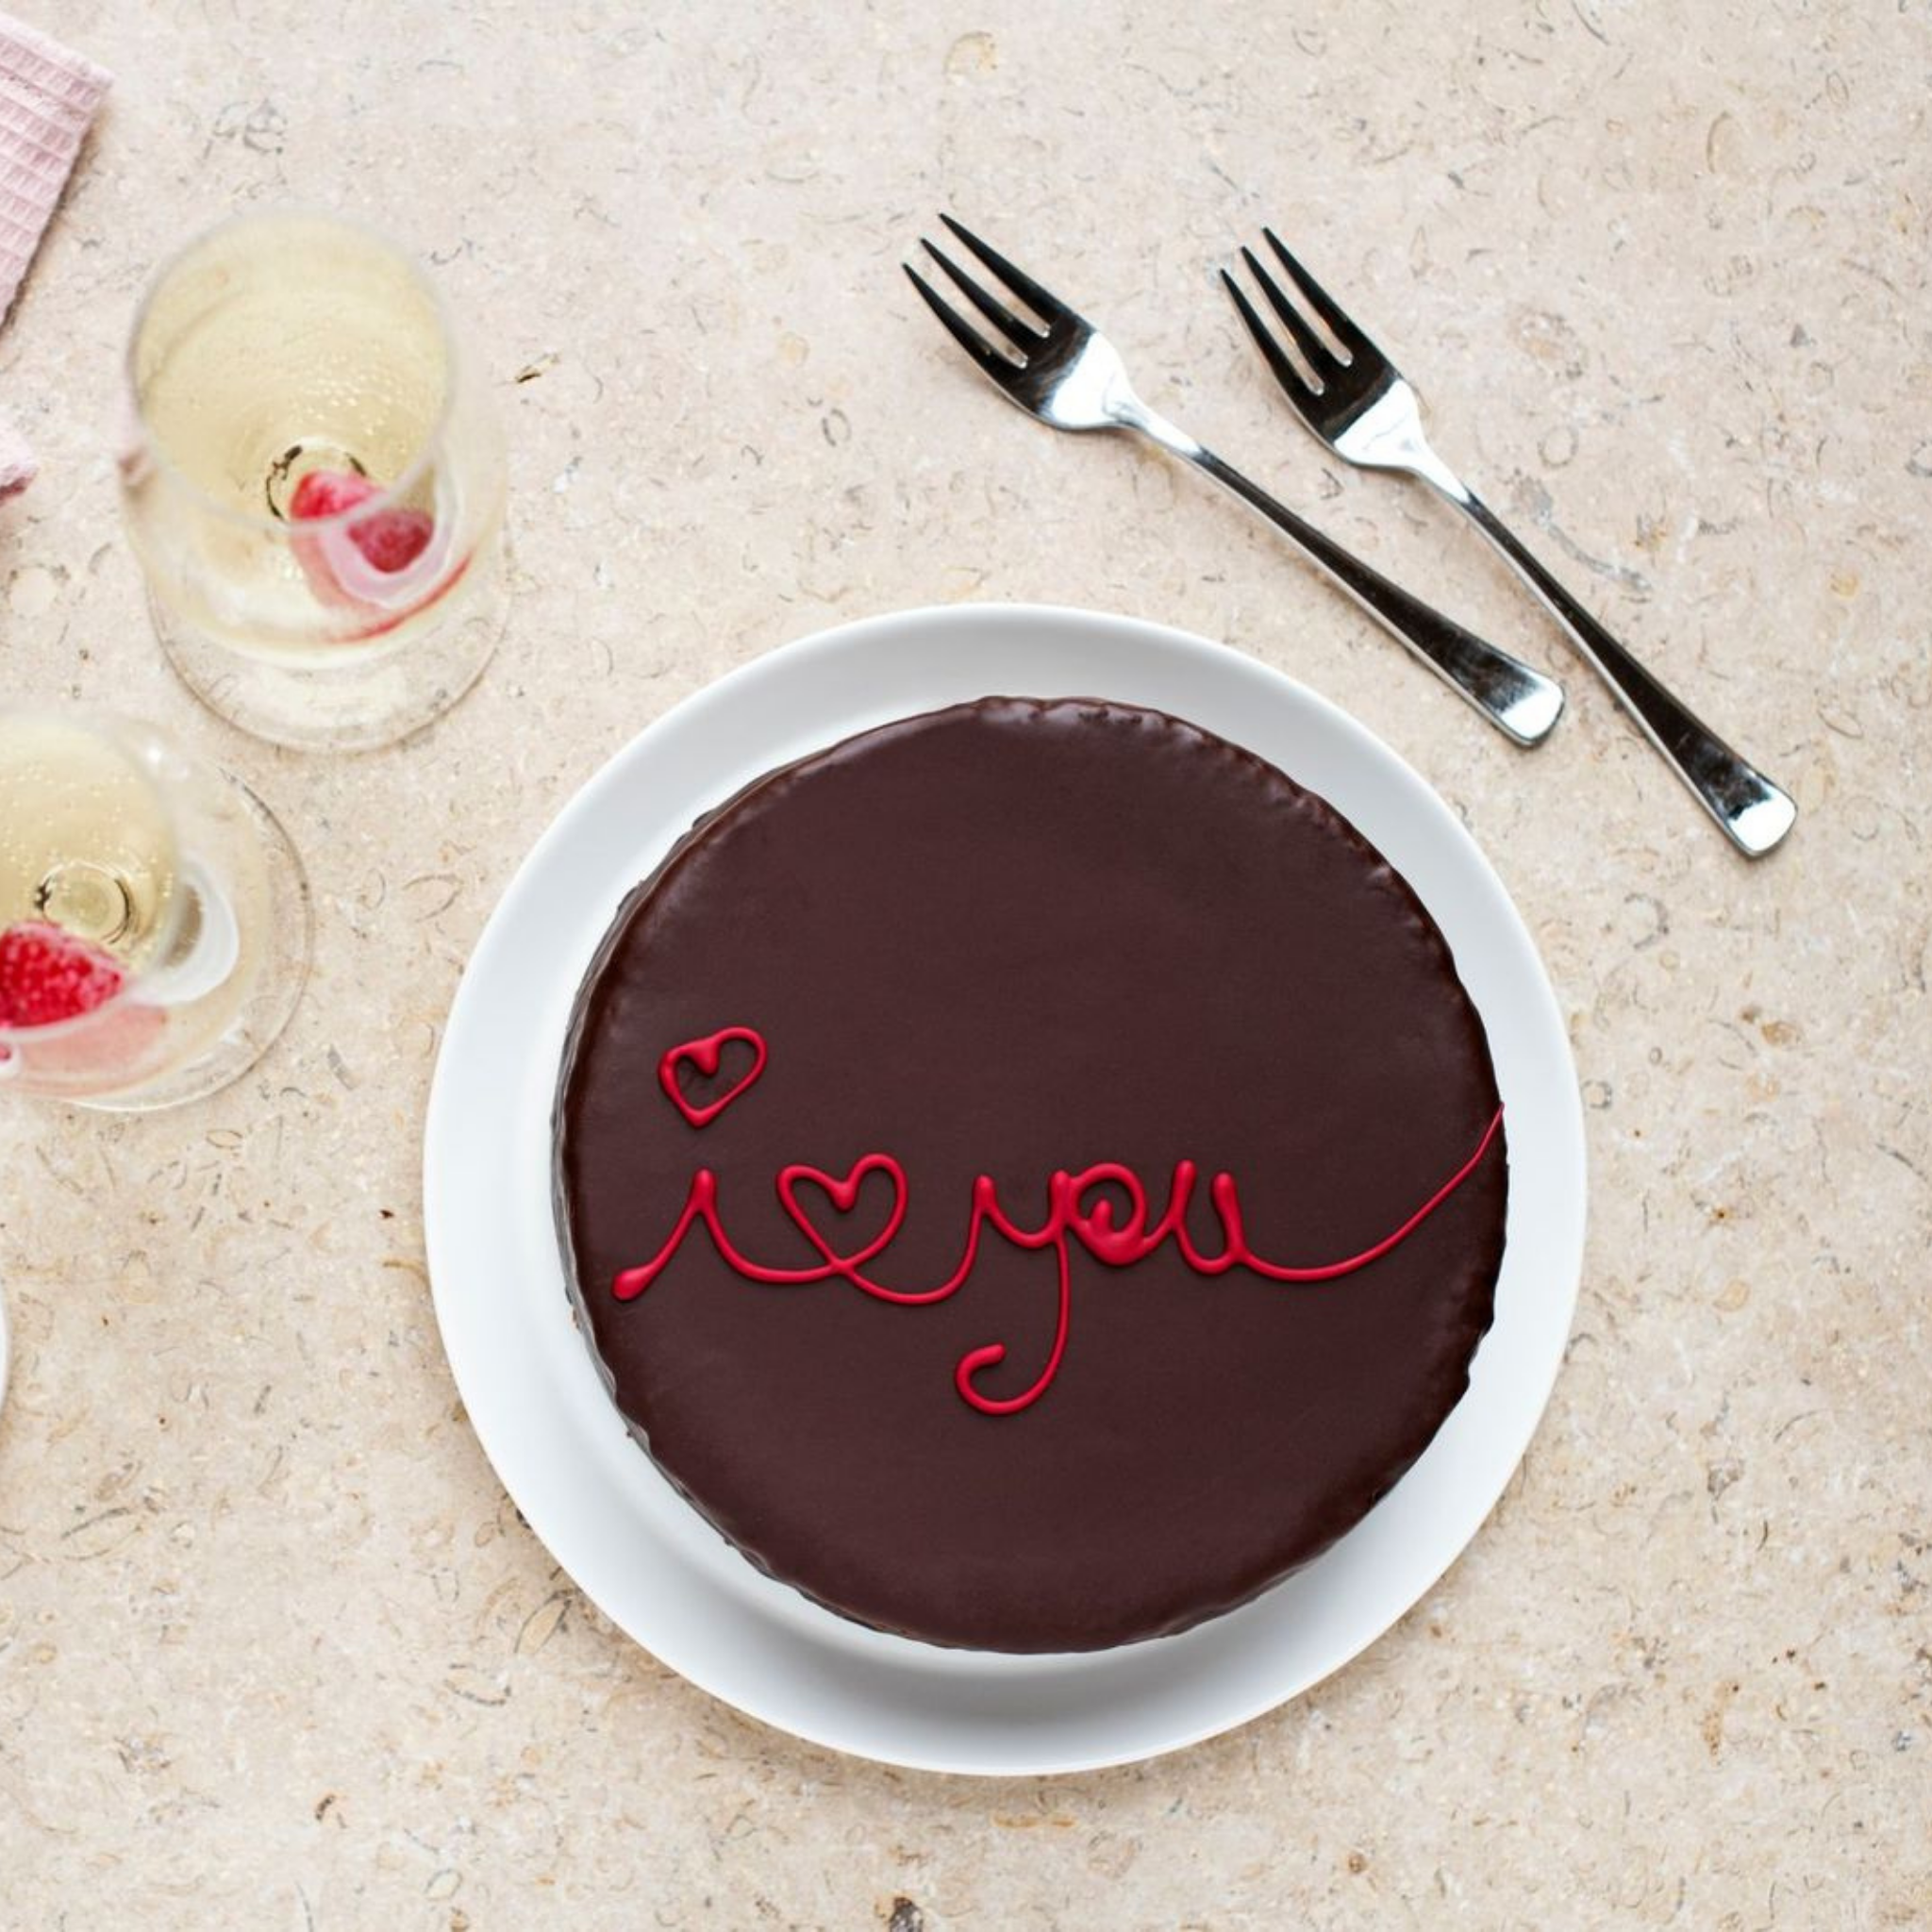 i, love, you, lovely, cake, red, writing, sacher, sachertorte, apricot, jam, choc, chocolate, valentines, valentine's, heart, cake